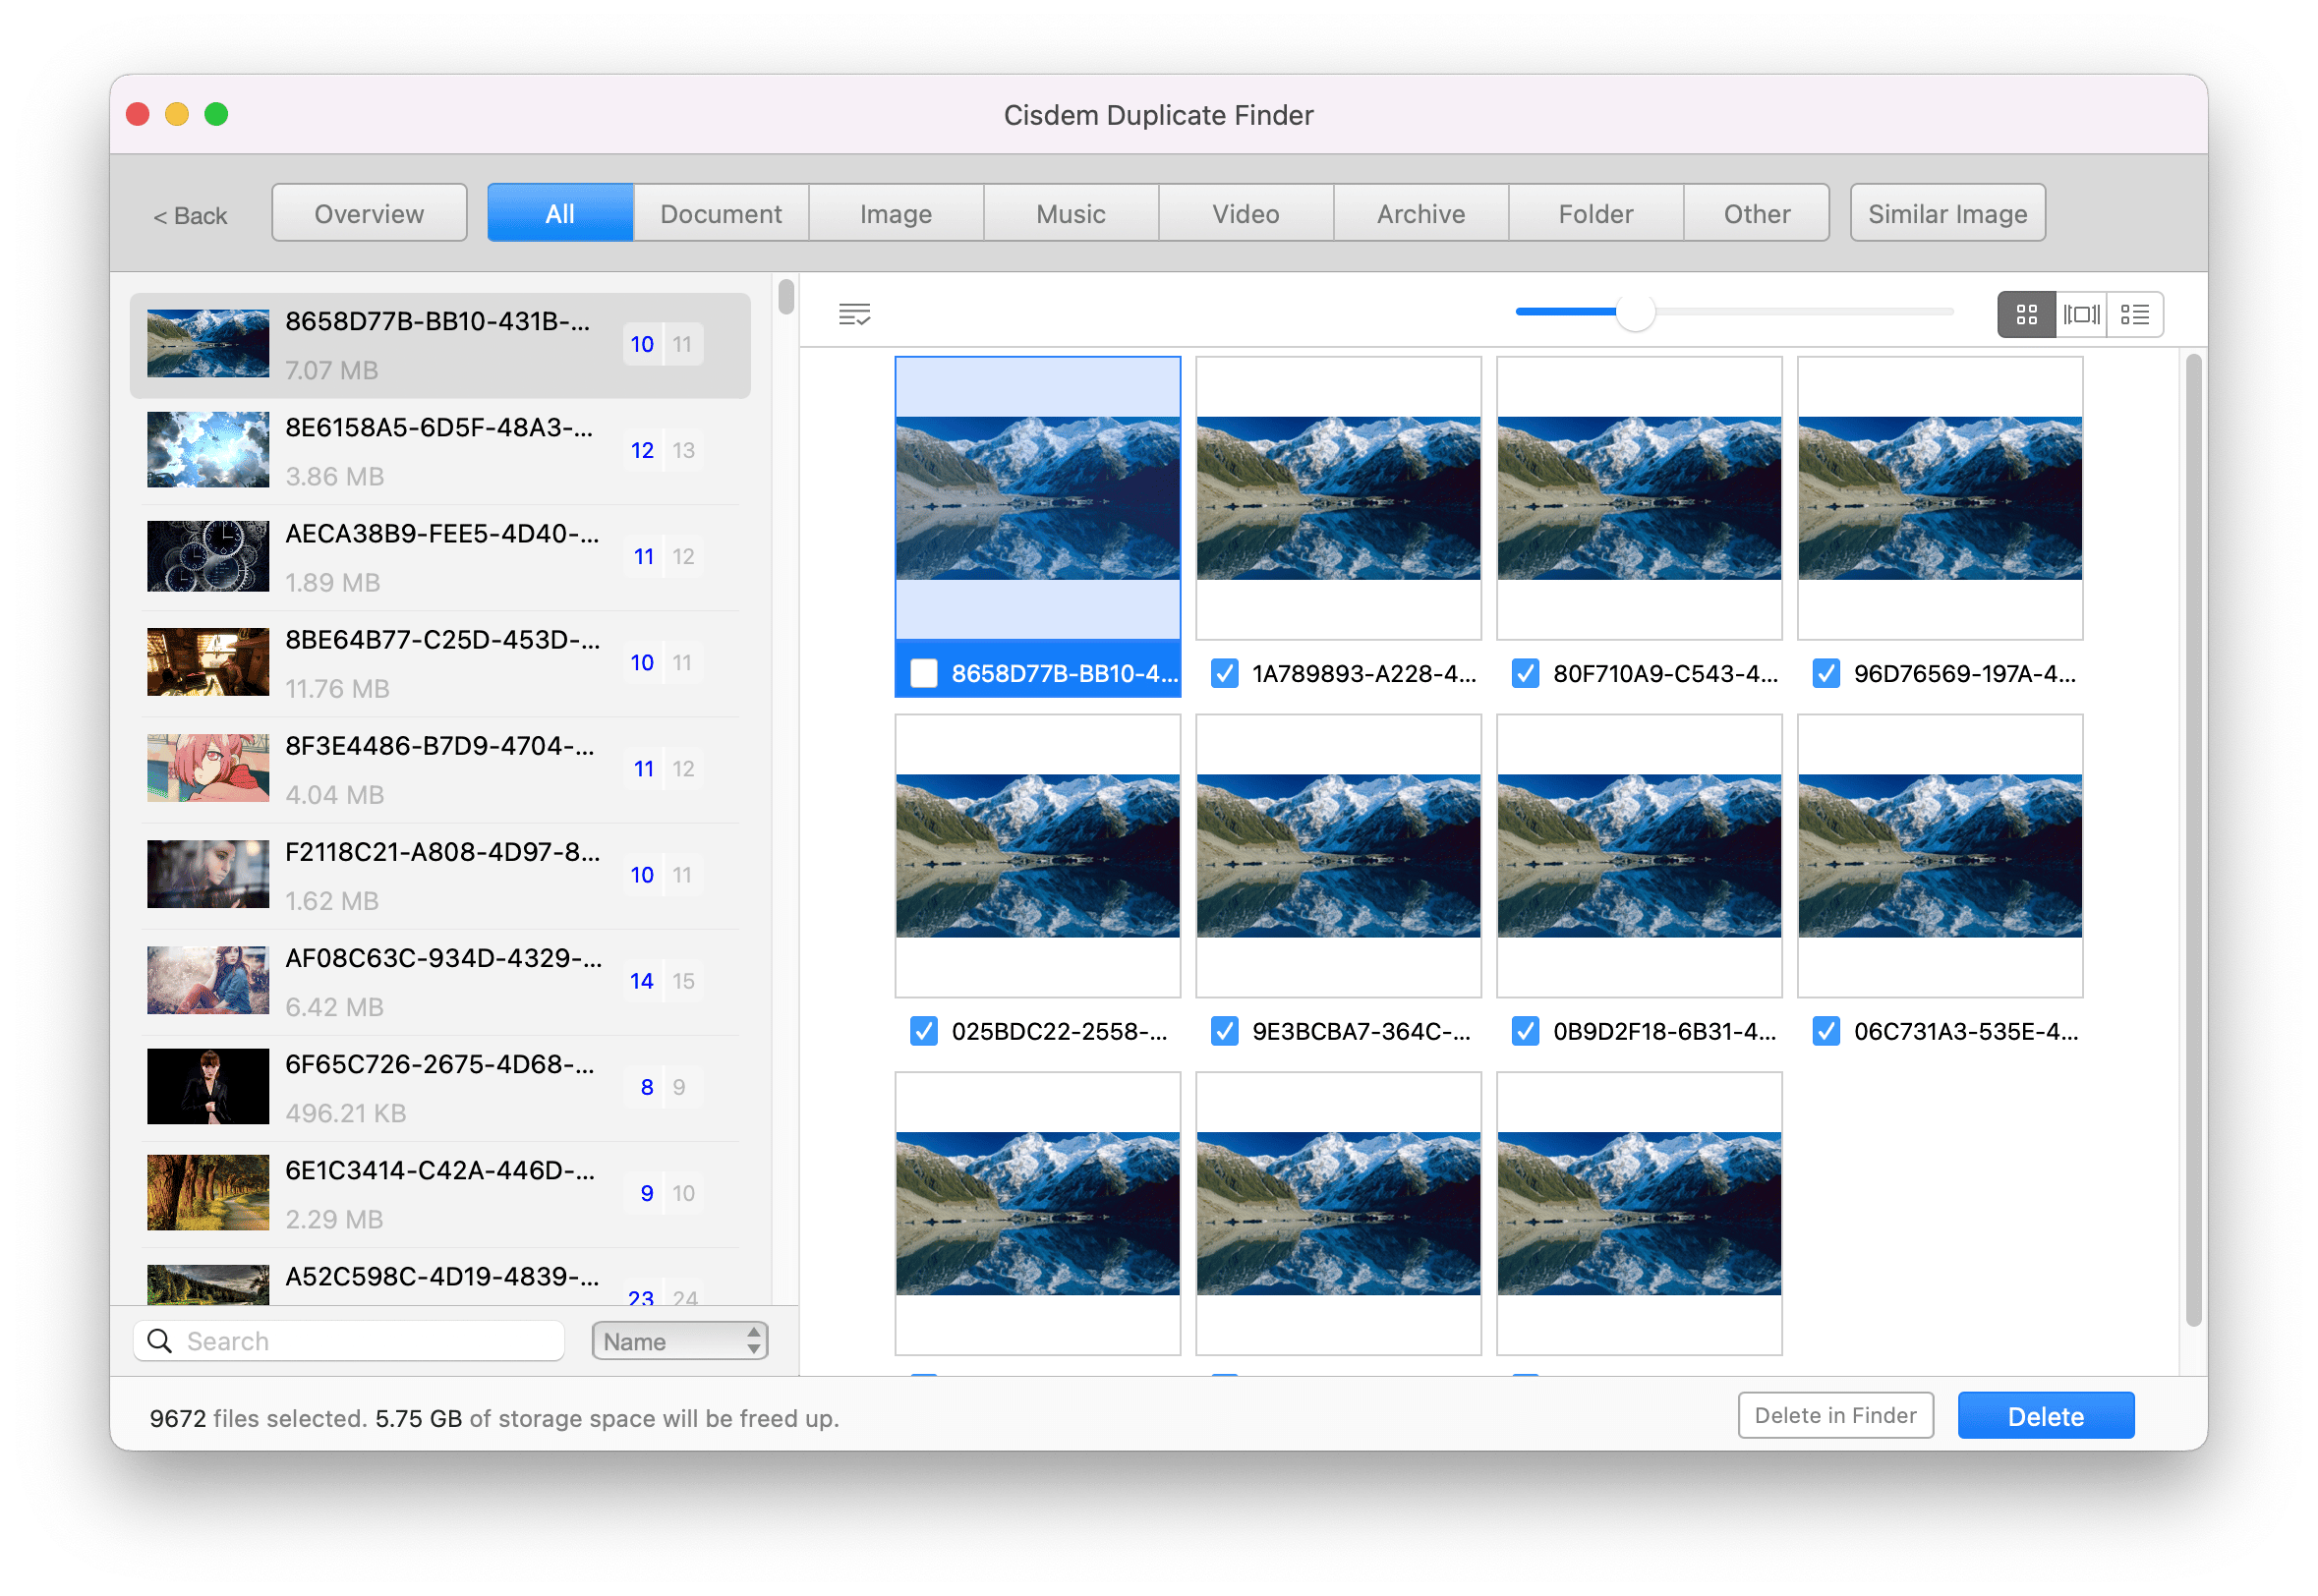  Cisdem Duplicate Finder window showing duplicate images